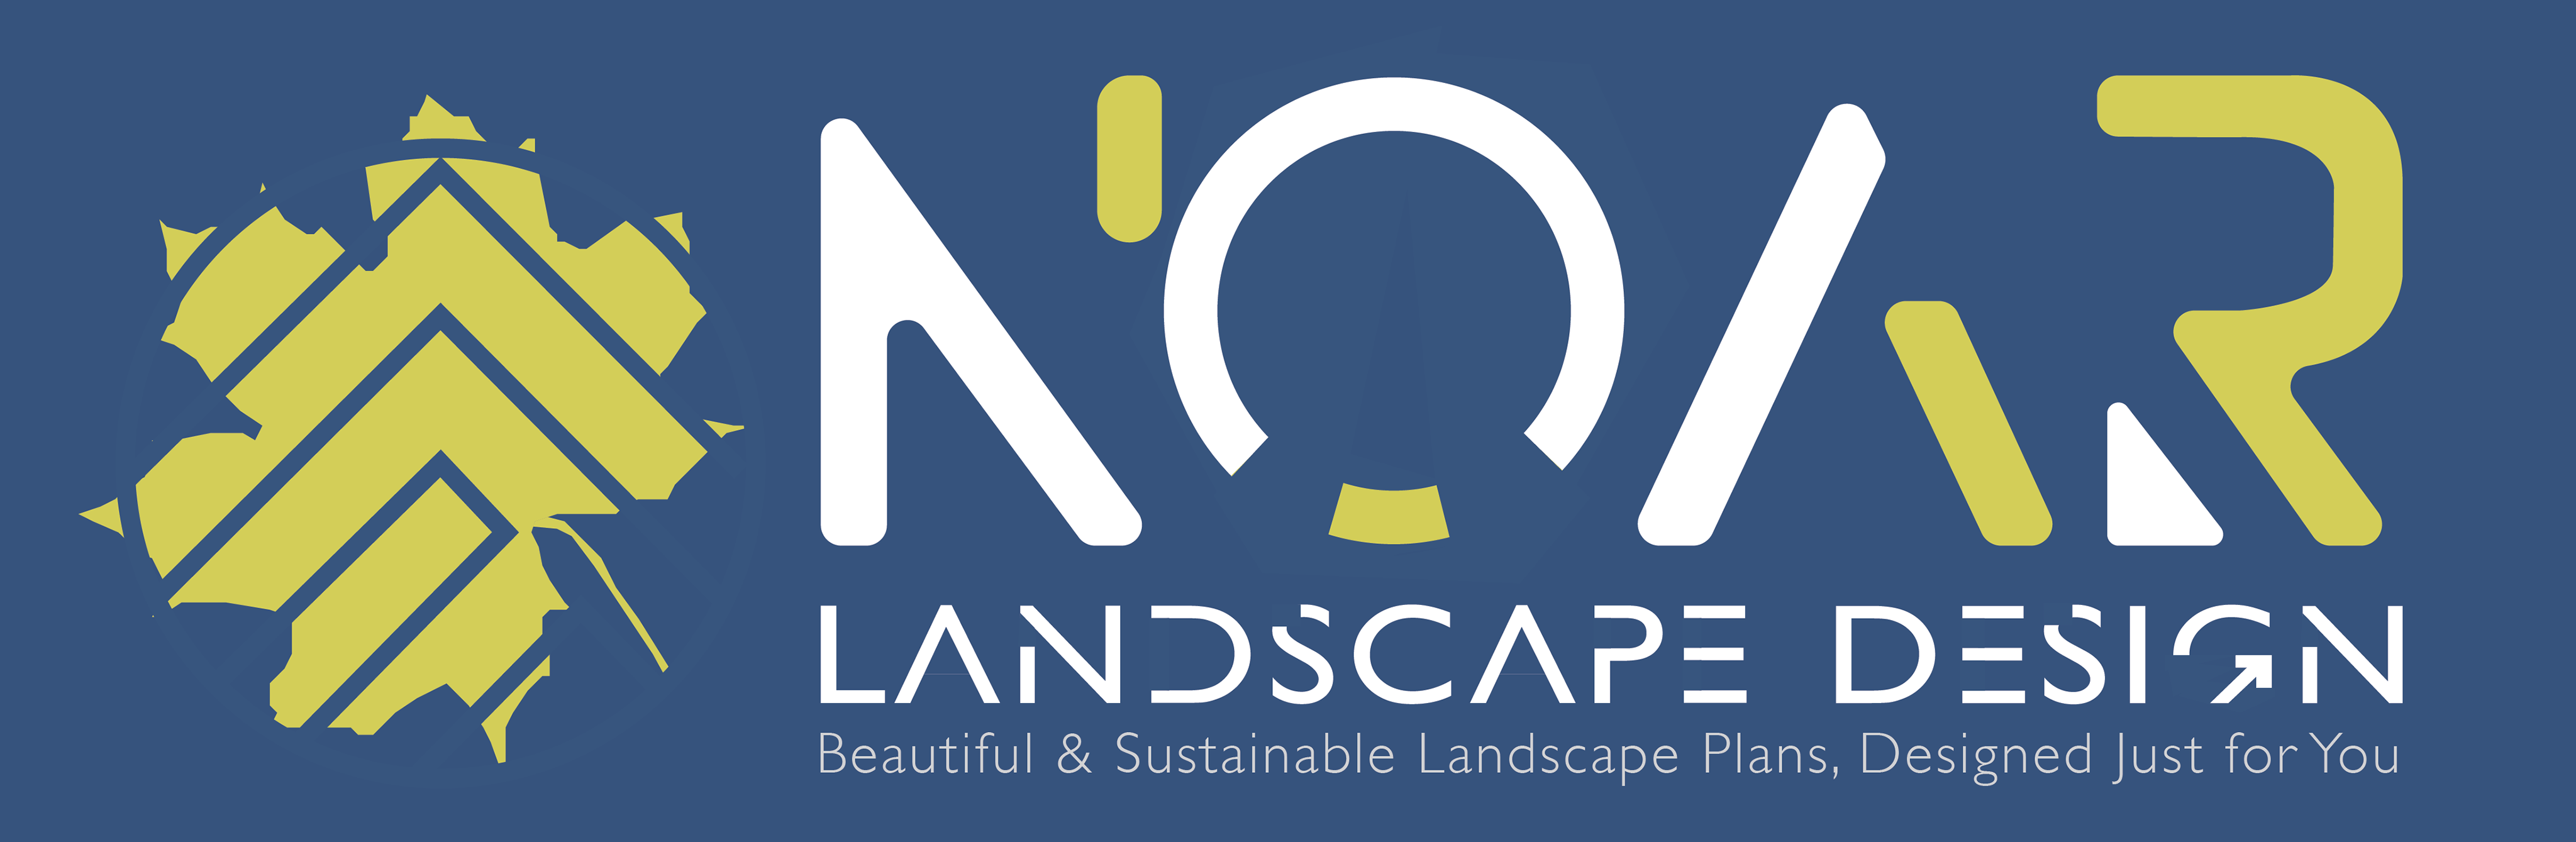 NOAR Landscape Design, LLC